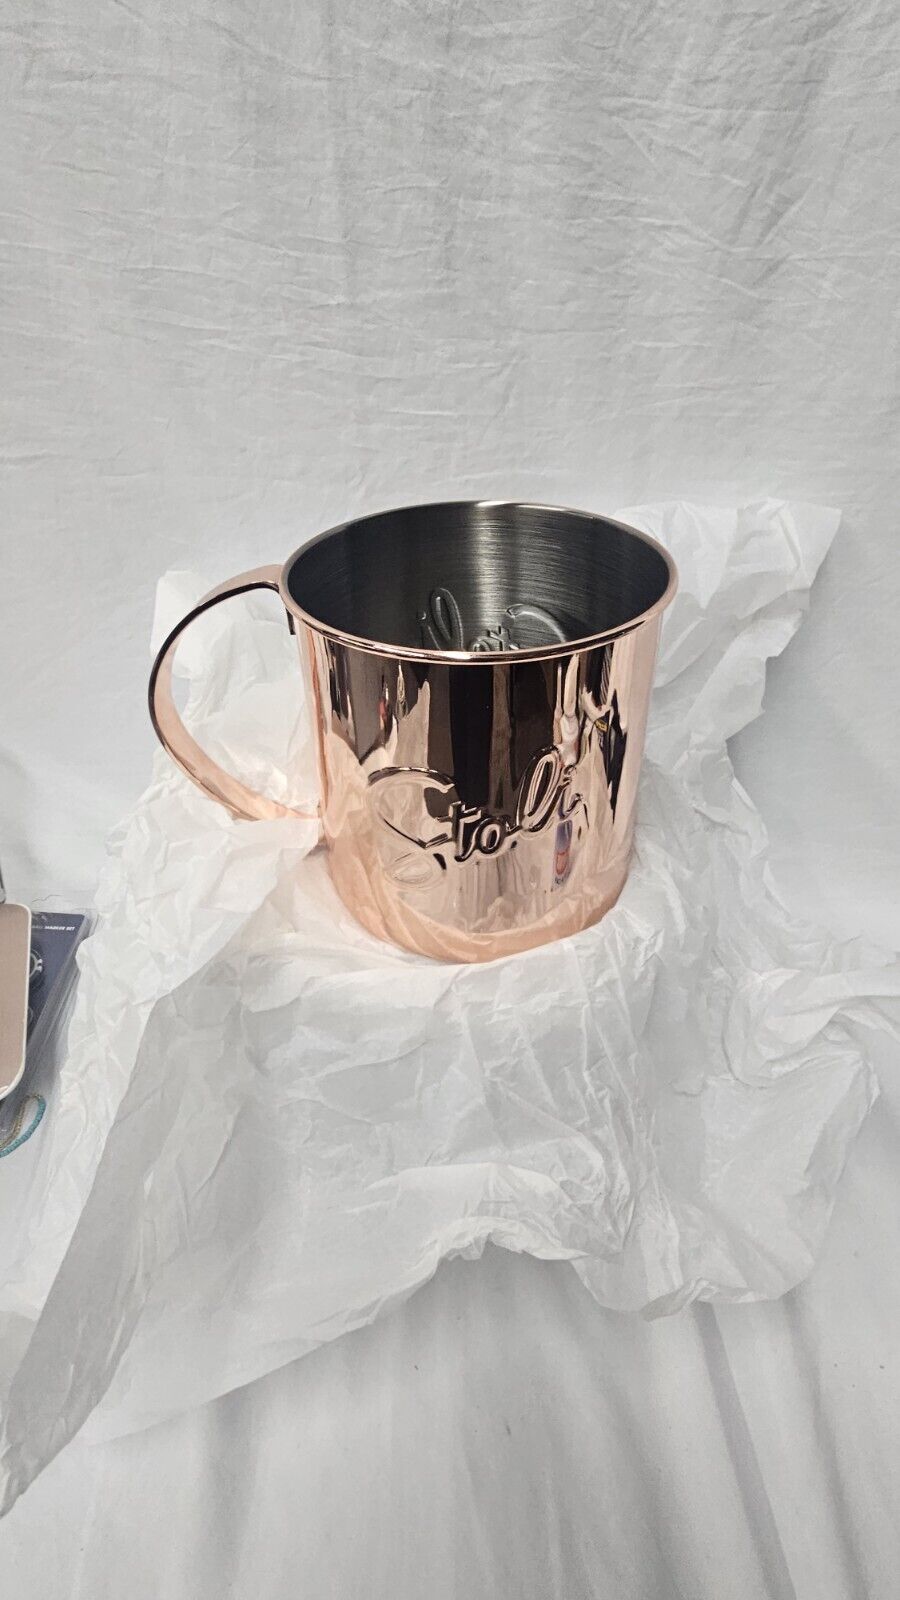 Stoli Stolichnaya Vodka Moscow Mule Copper Stainless Mug Cup Large 7\